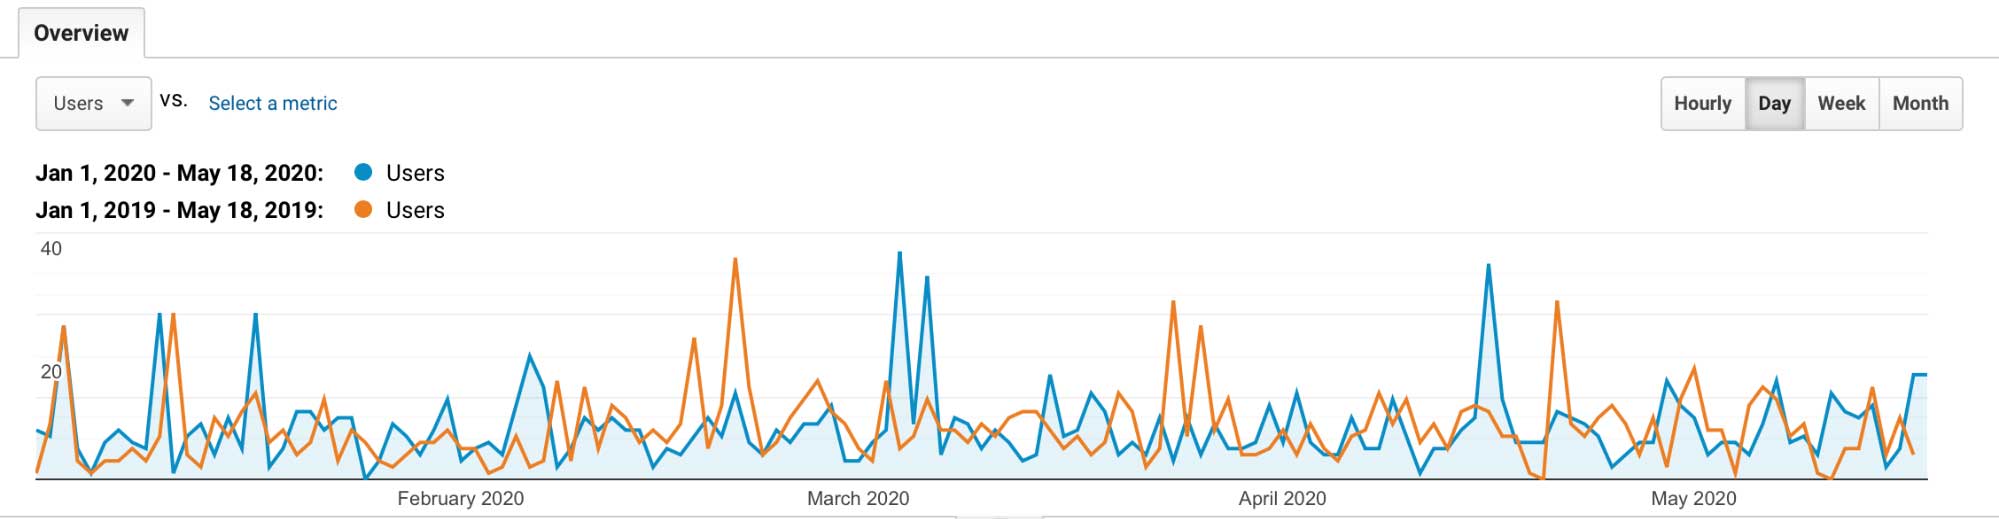 Google Analytics - Date Range Comparison image